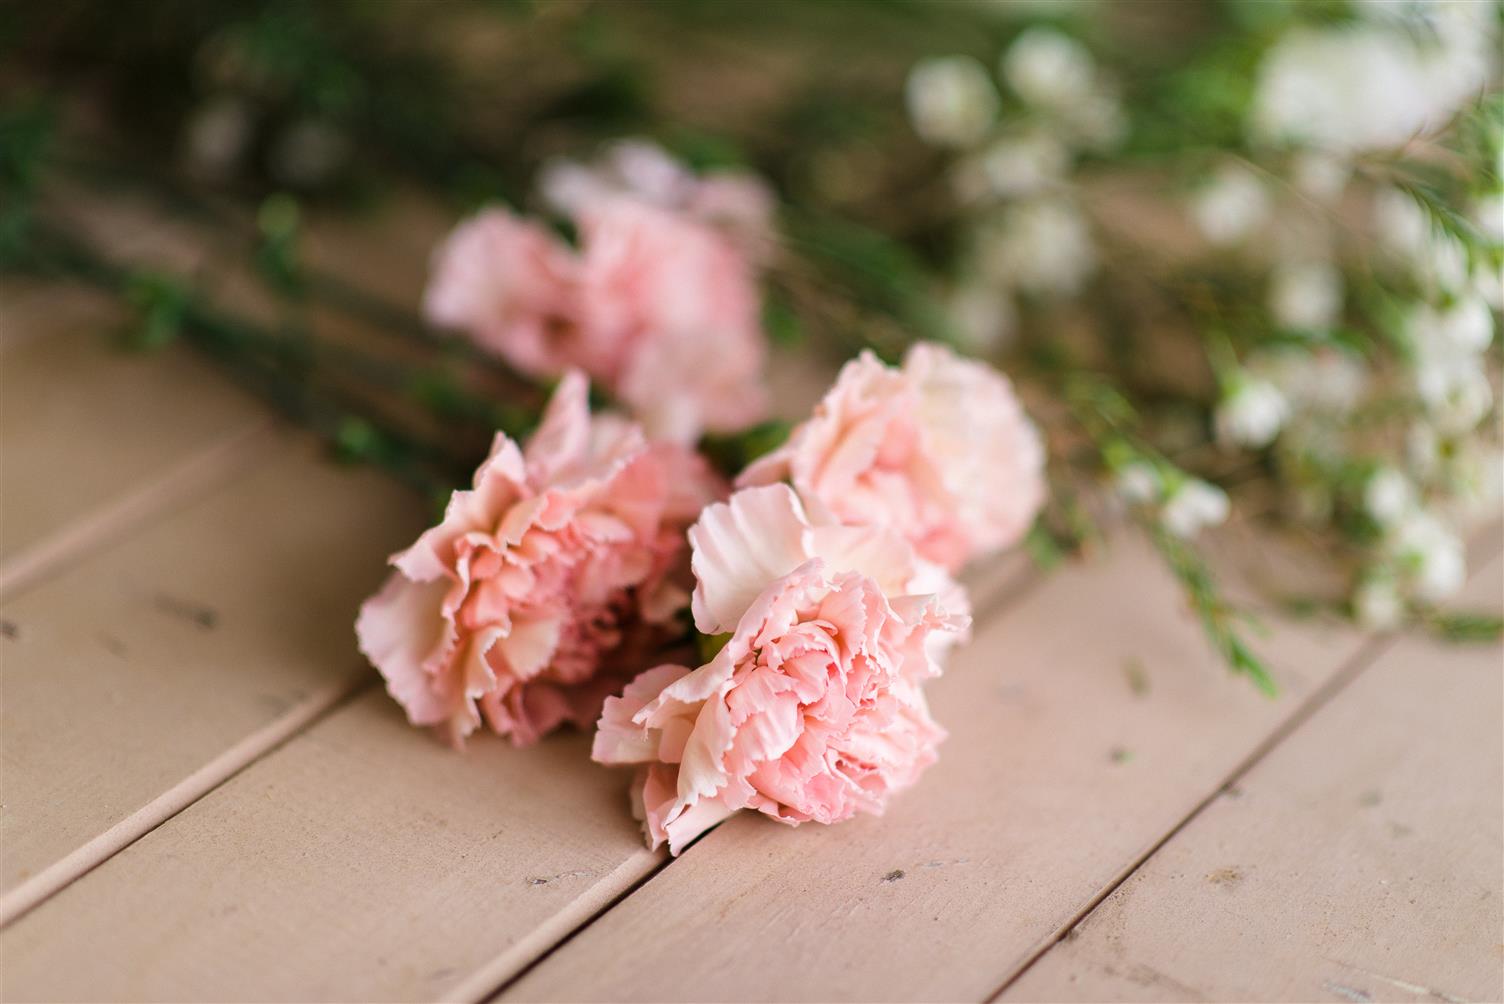 A Country Garden Inspired Bridal Bouquet